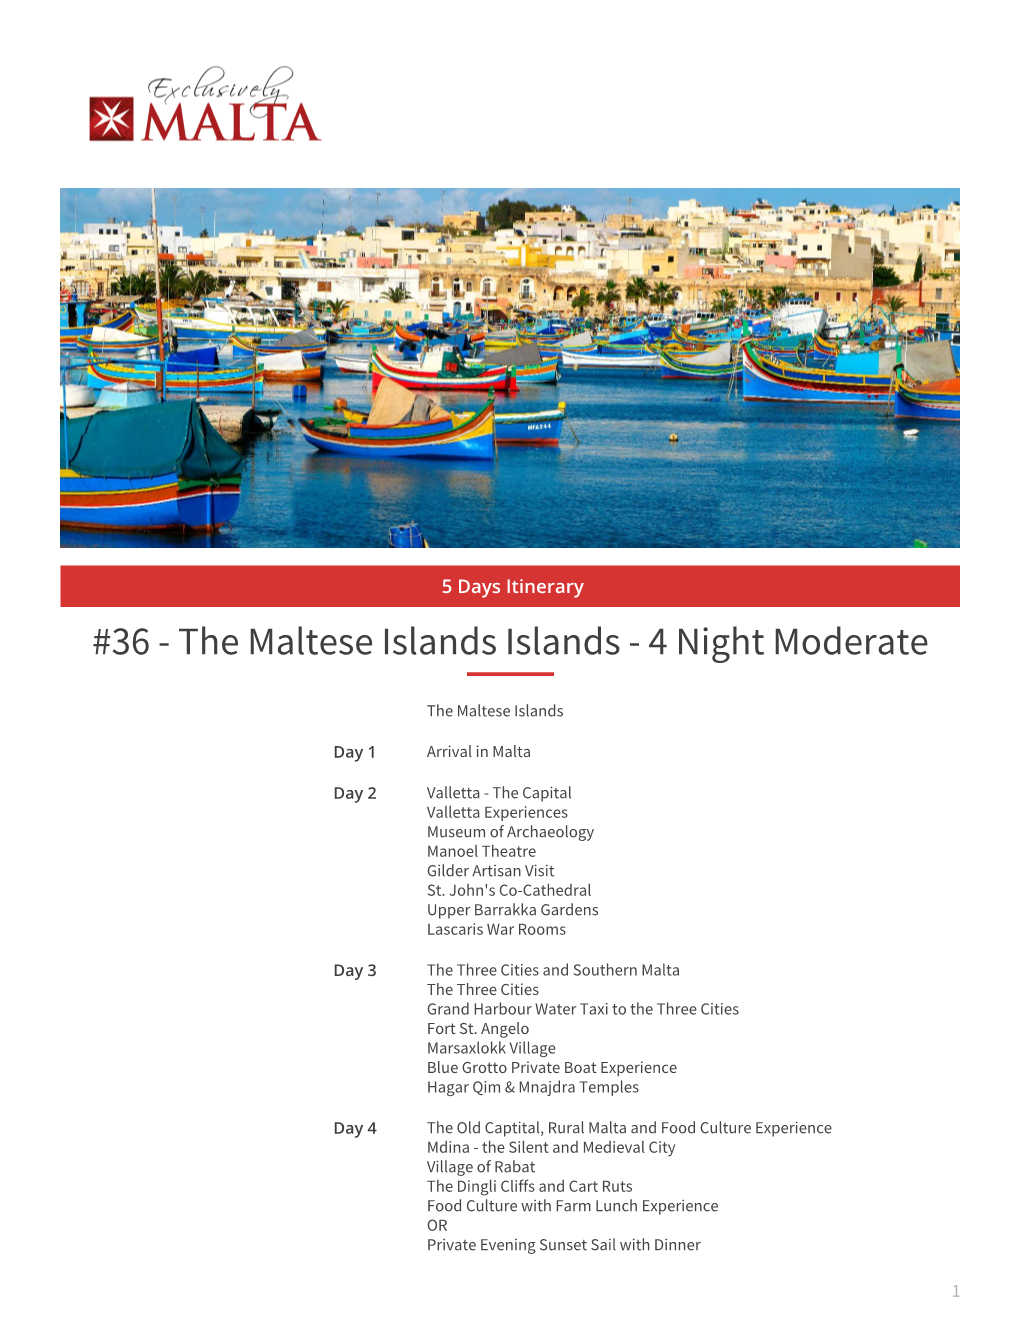 The Maltese Islands Islands - 4 Night Moderate